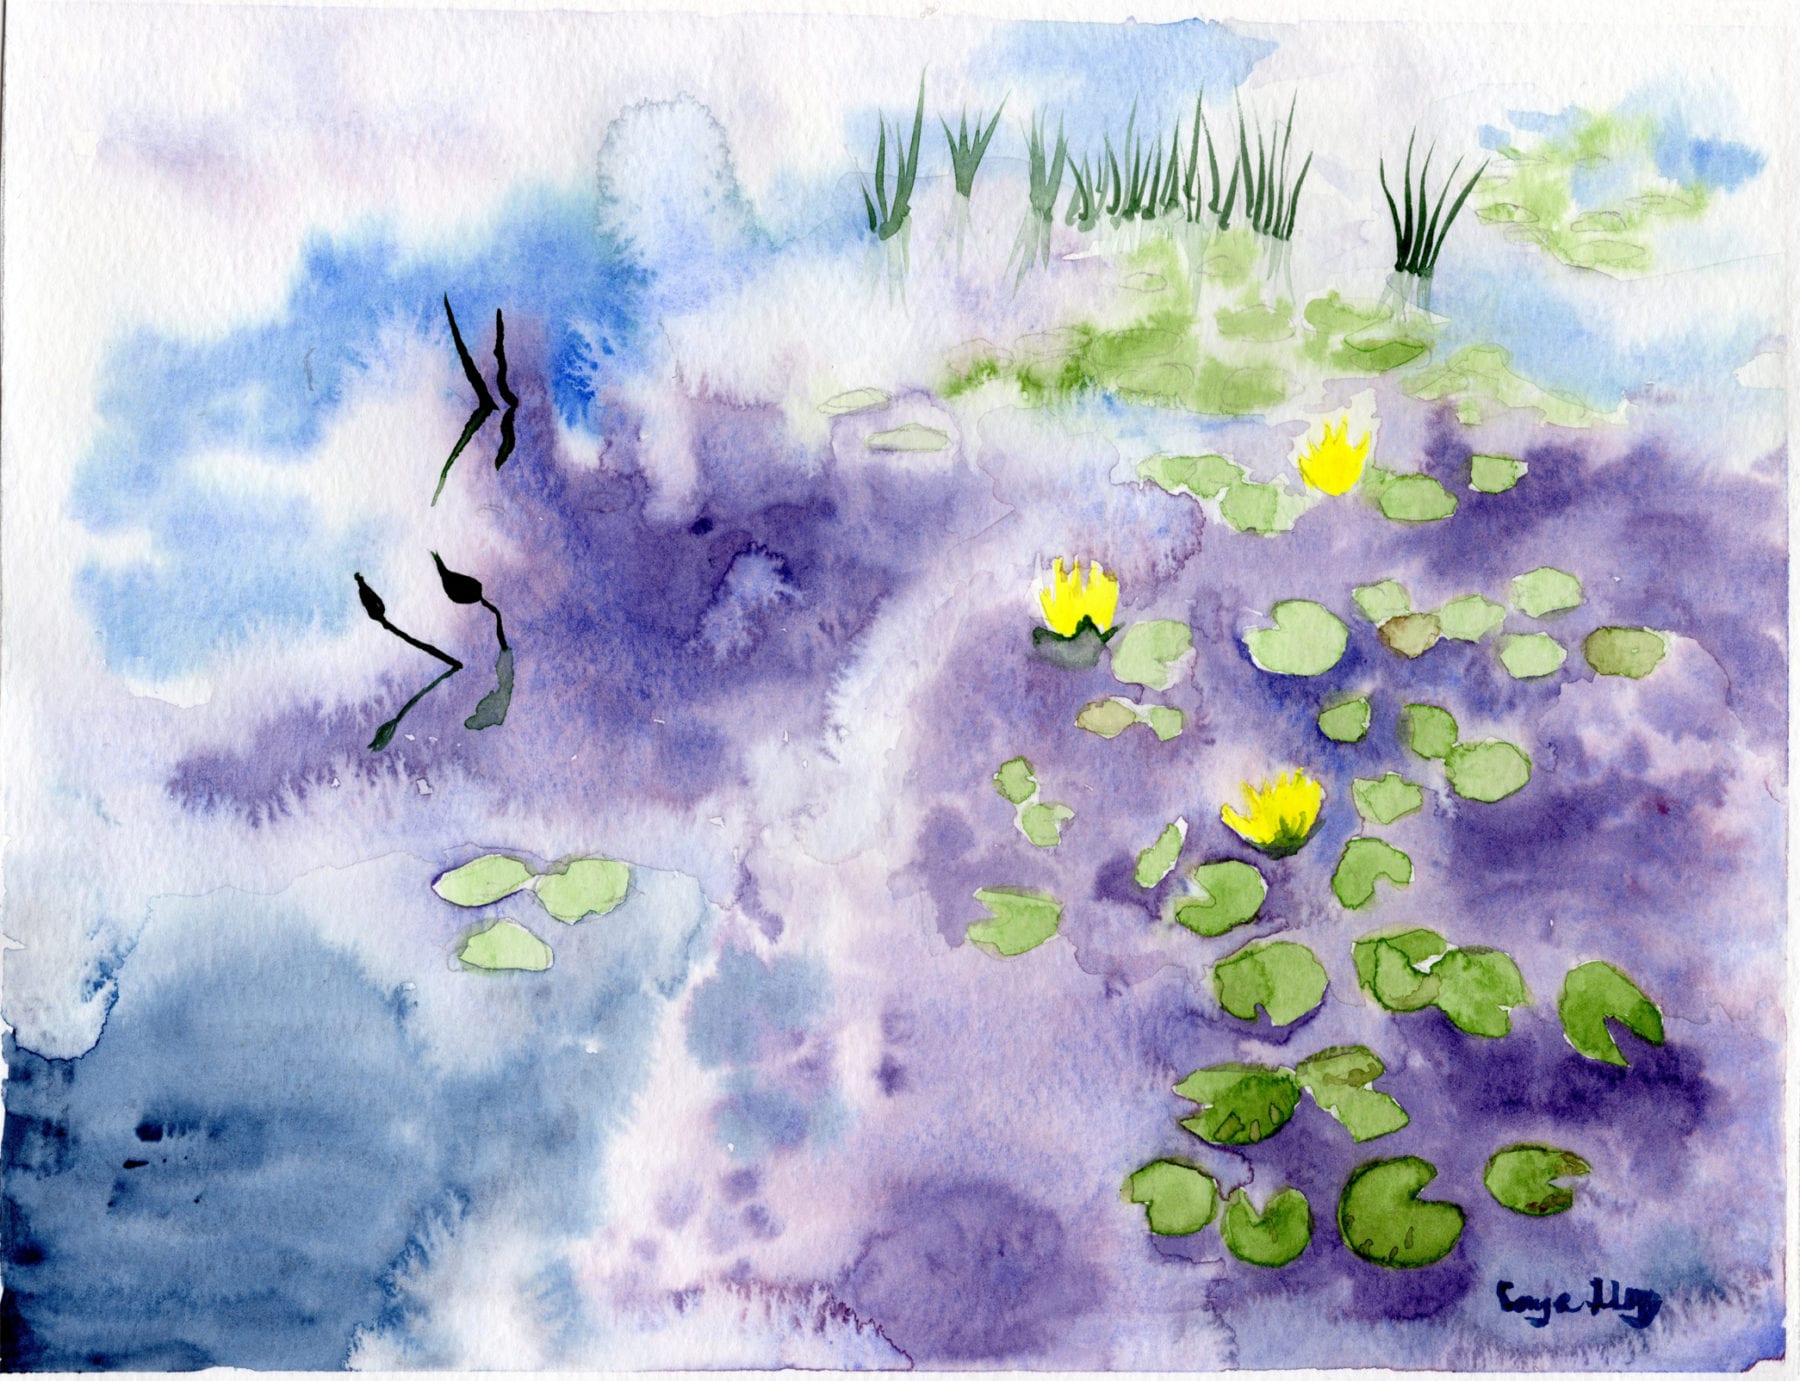 Sonya Legg, Sacandaga River Lilies, watercolor on paper, 11 x 8.5 inches